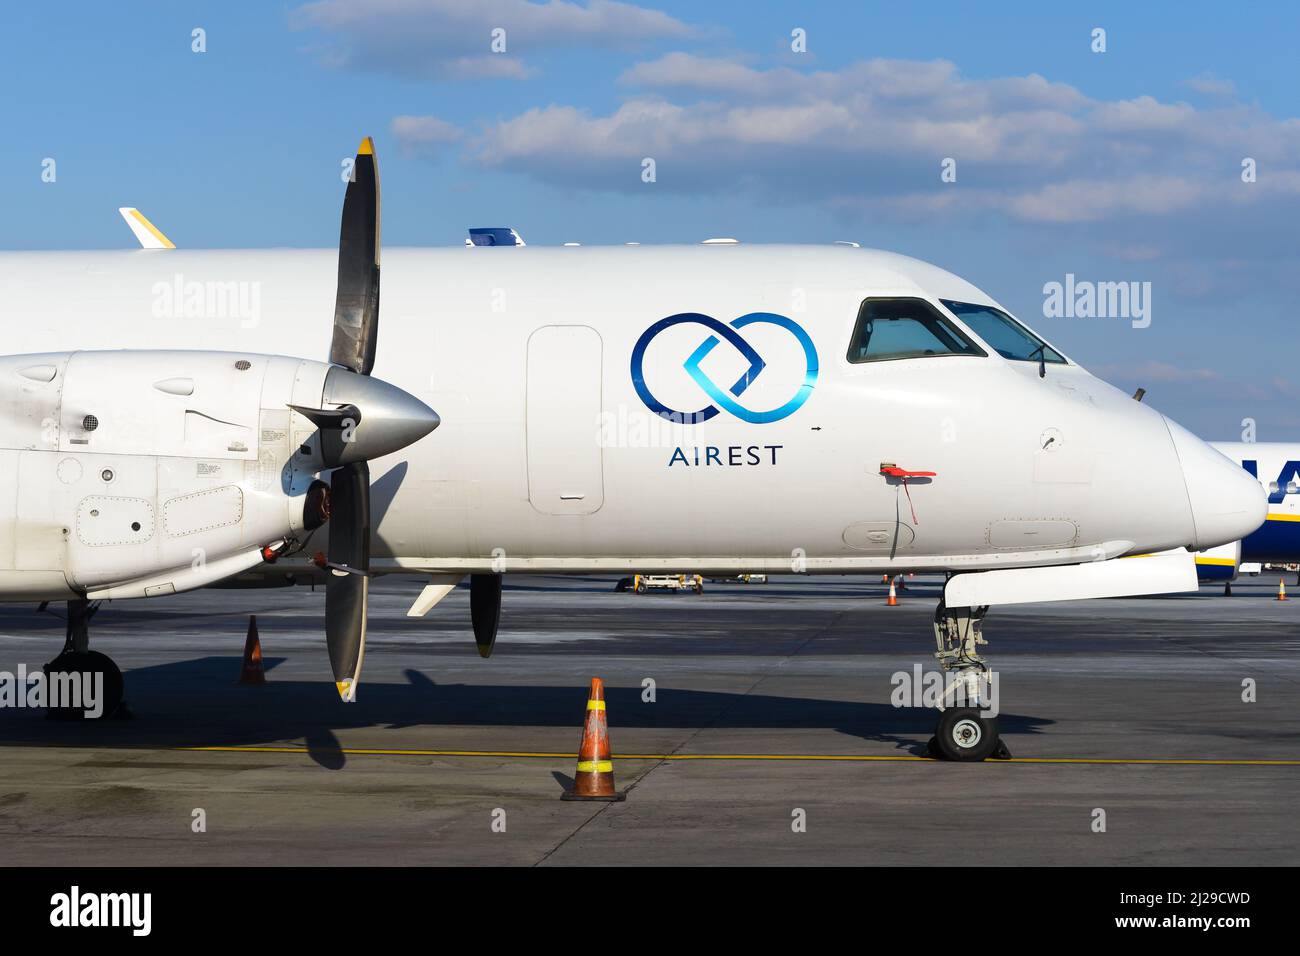 Airest Airline Saab Fairchild 340 Flugzeuge. Estnische Charterfluggesellschaft AirEst Flugzeug. Stockfoto